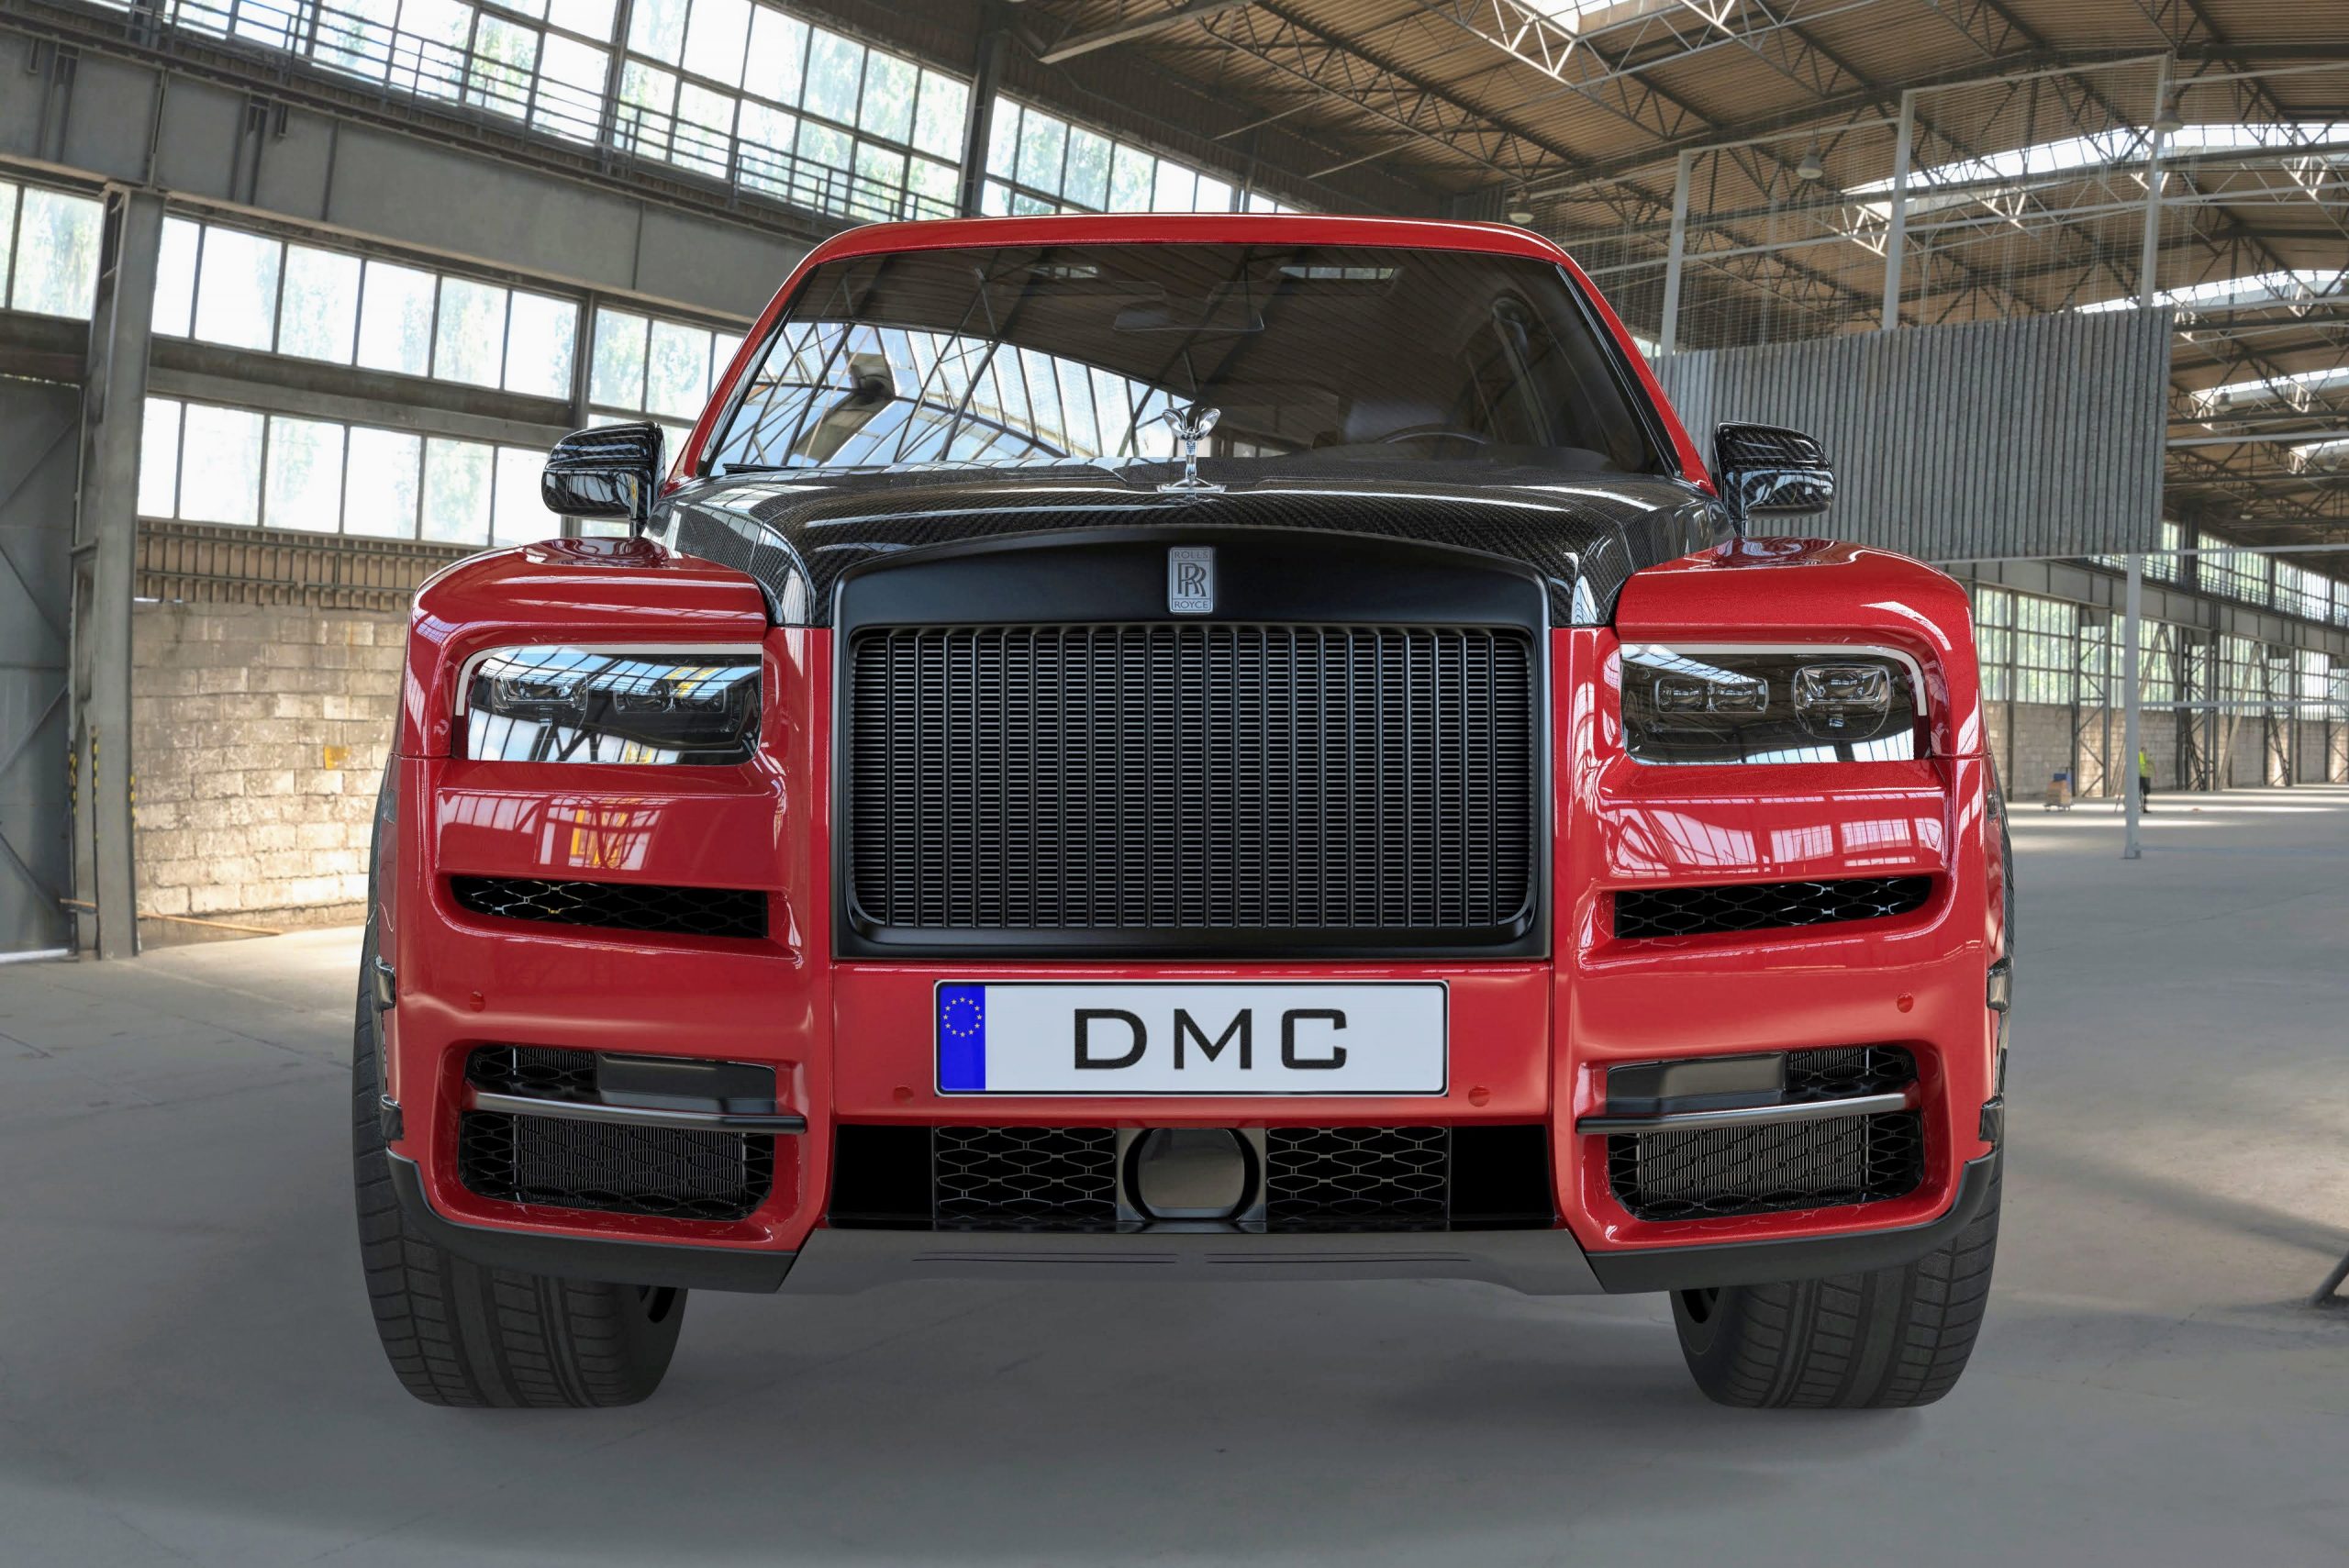 DMC Rolls Royce Cullinan “Emperor” Wide Body